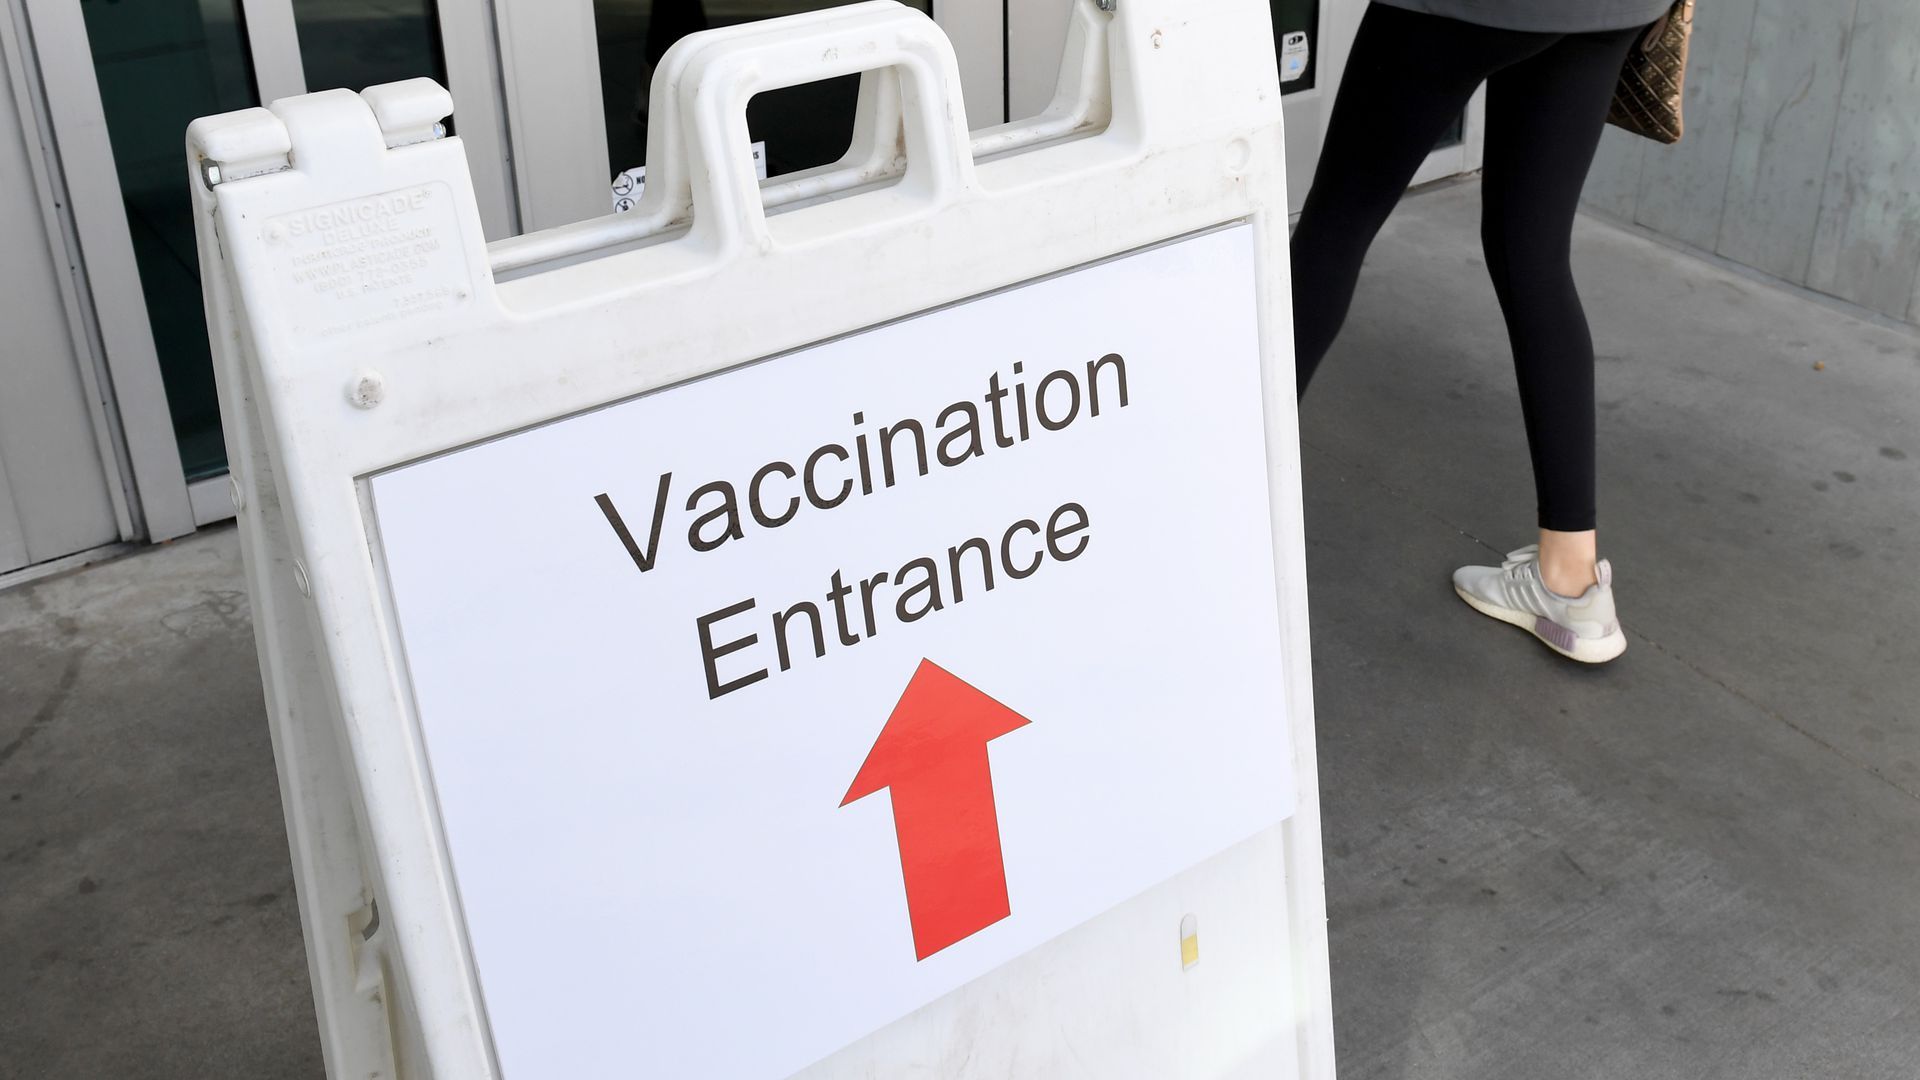 A vaccination center at UNLV in Las Vegas. 